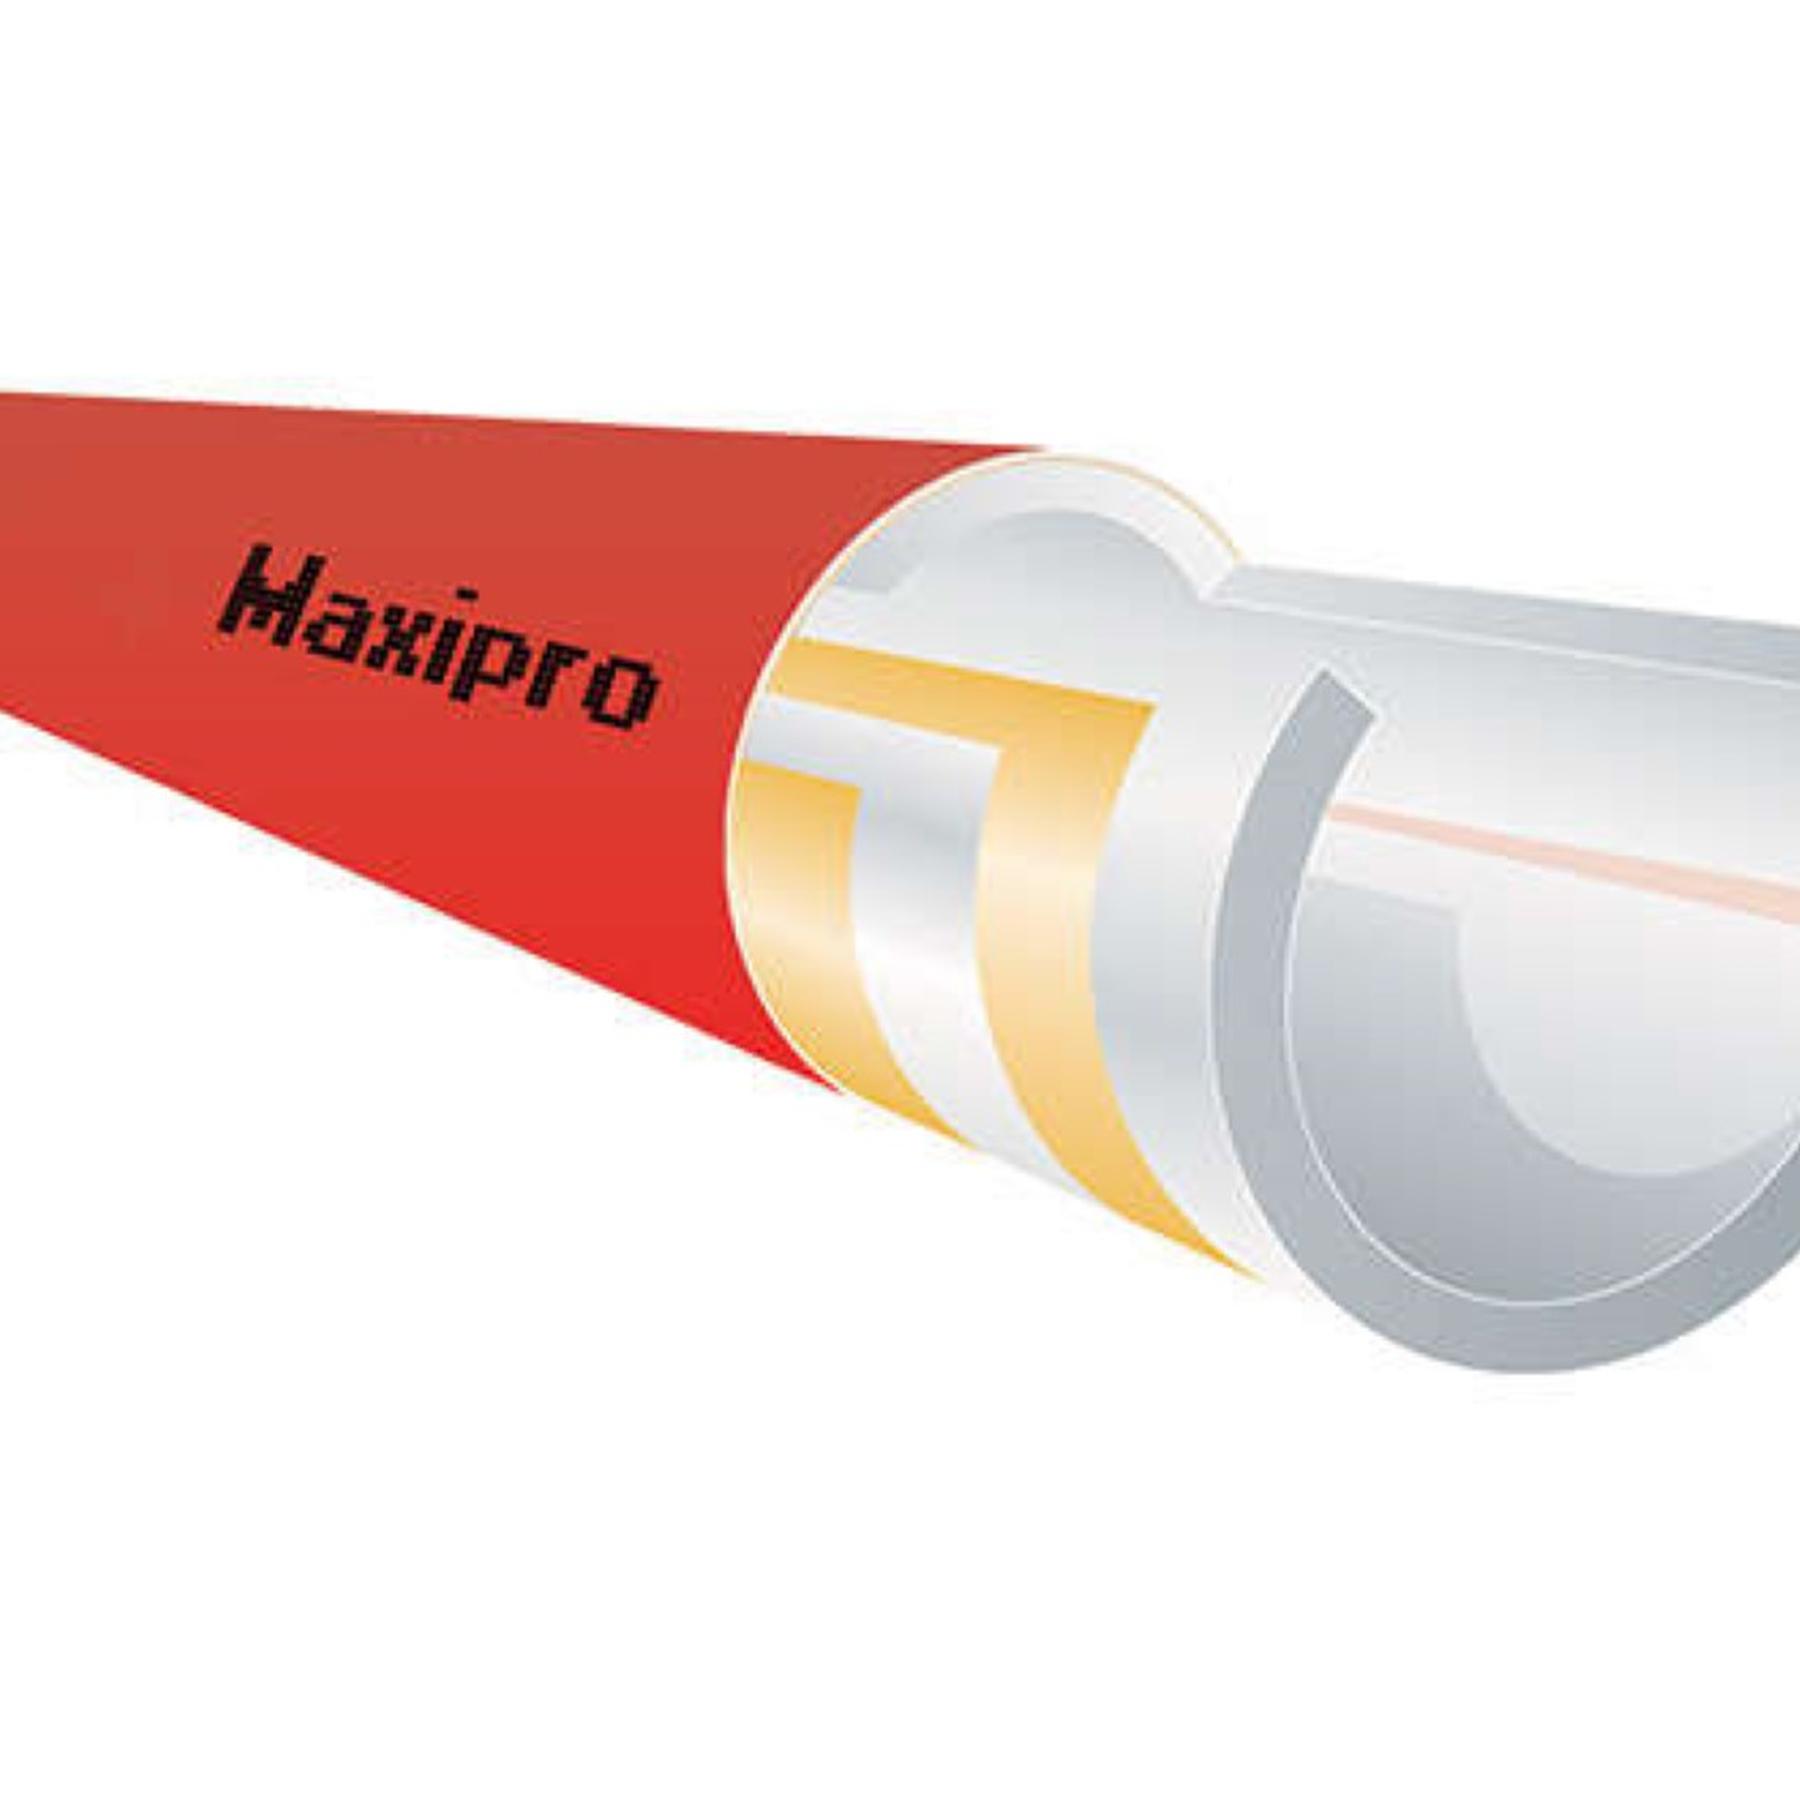 Tube ROTH Maxipro 16x1,5 BAO 120m